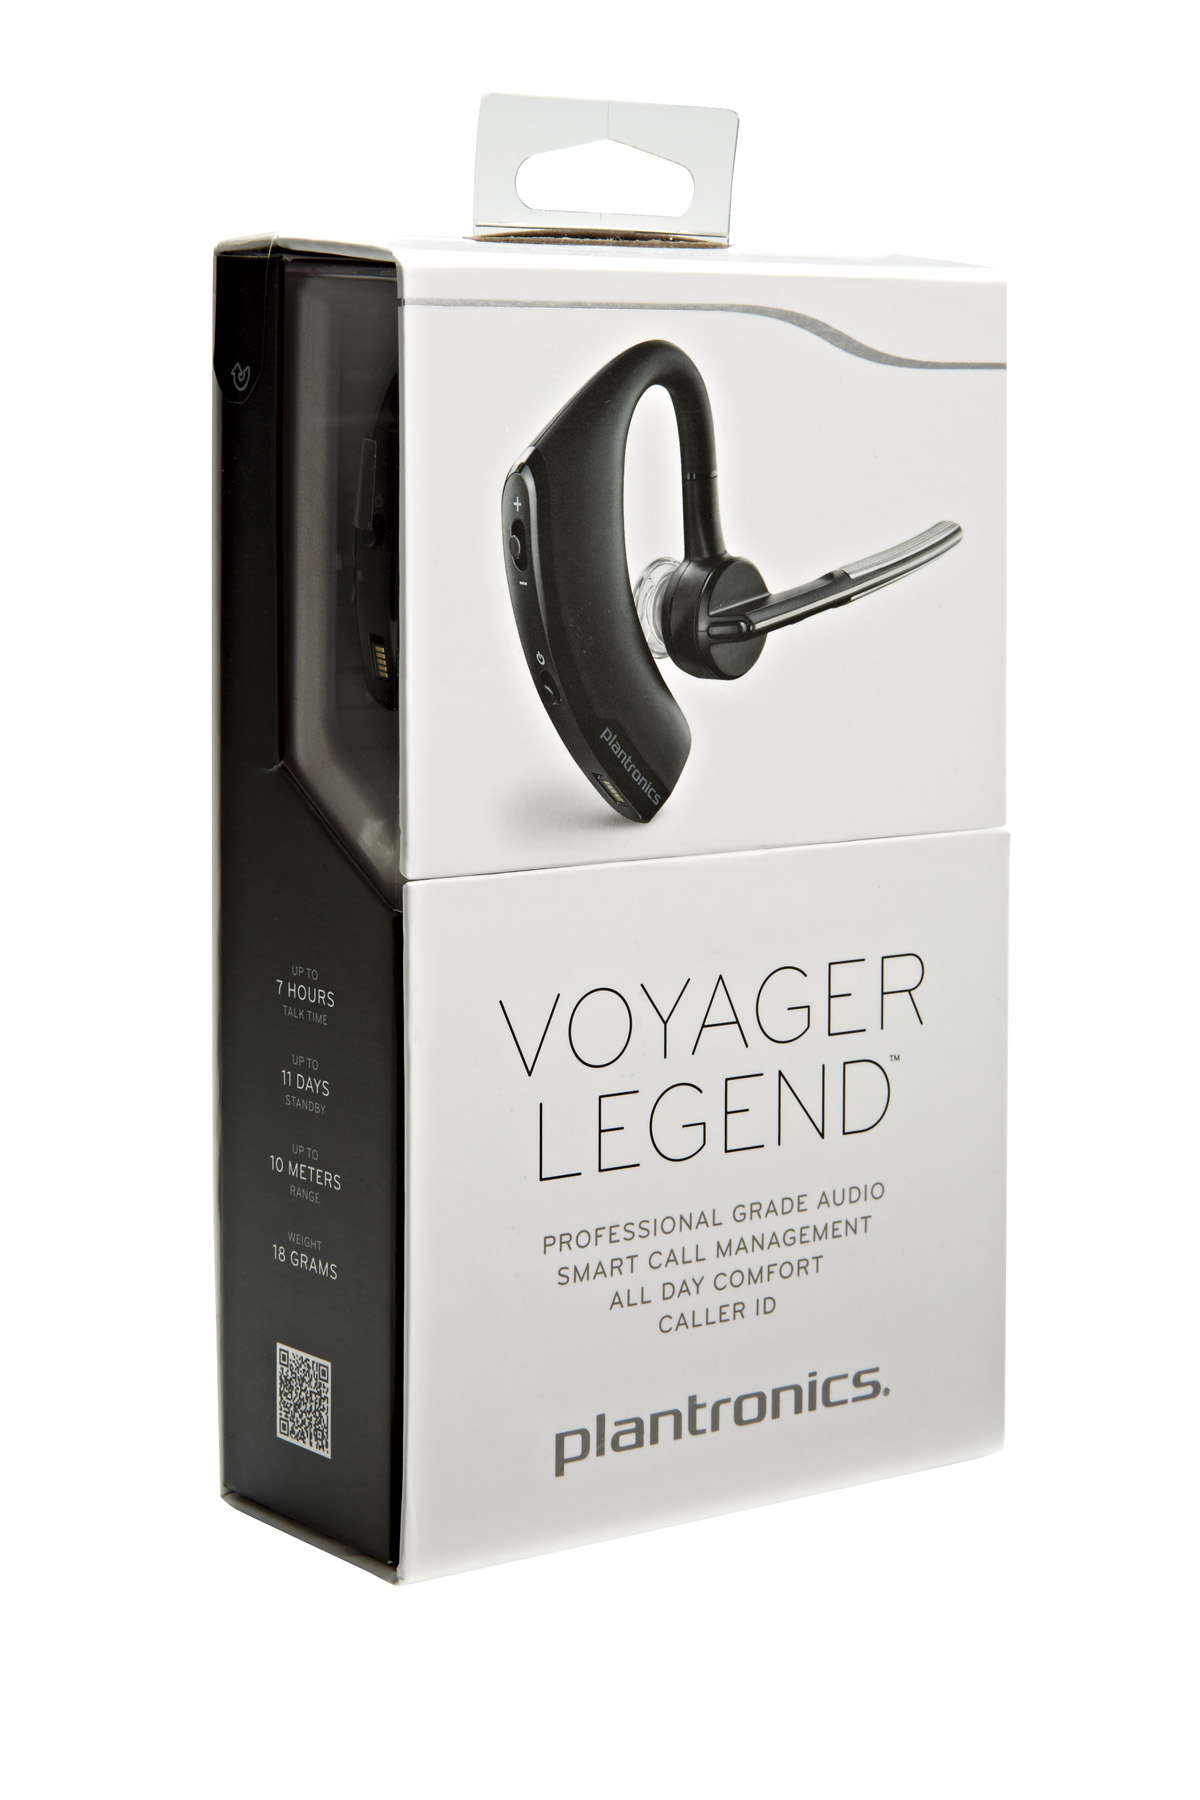 voyager legend bluetooth headset price in bangladesh